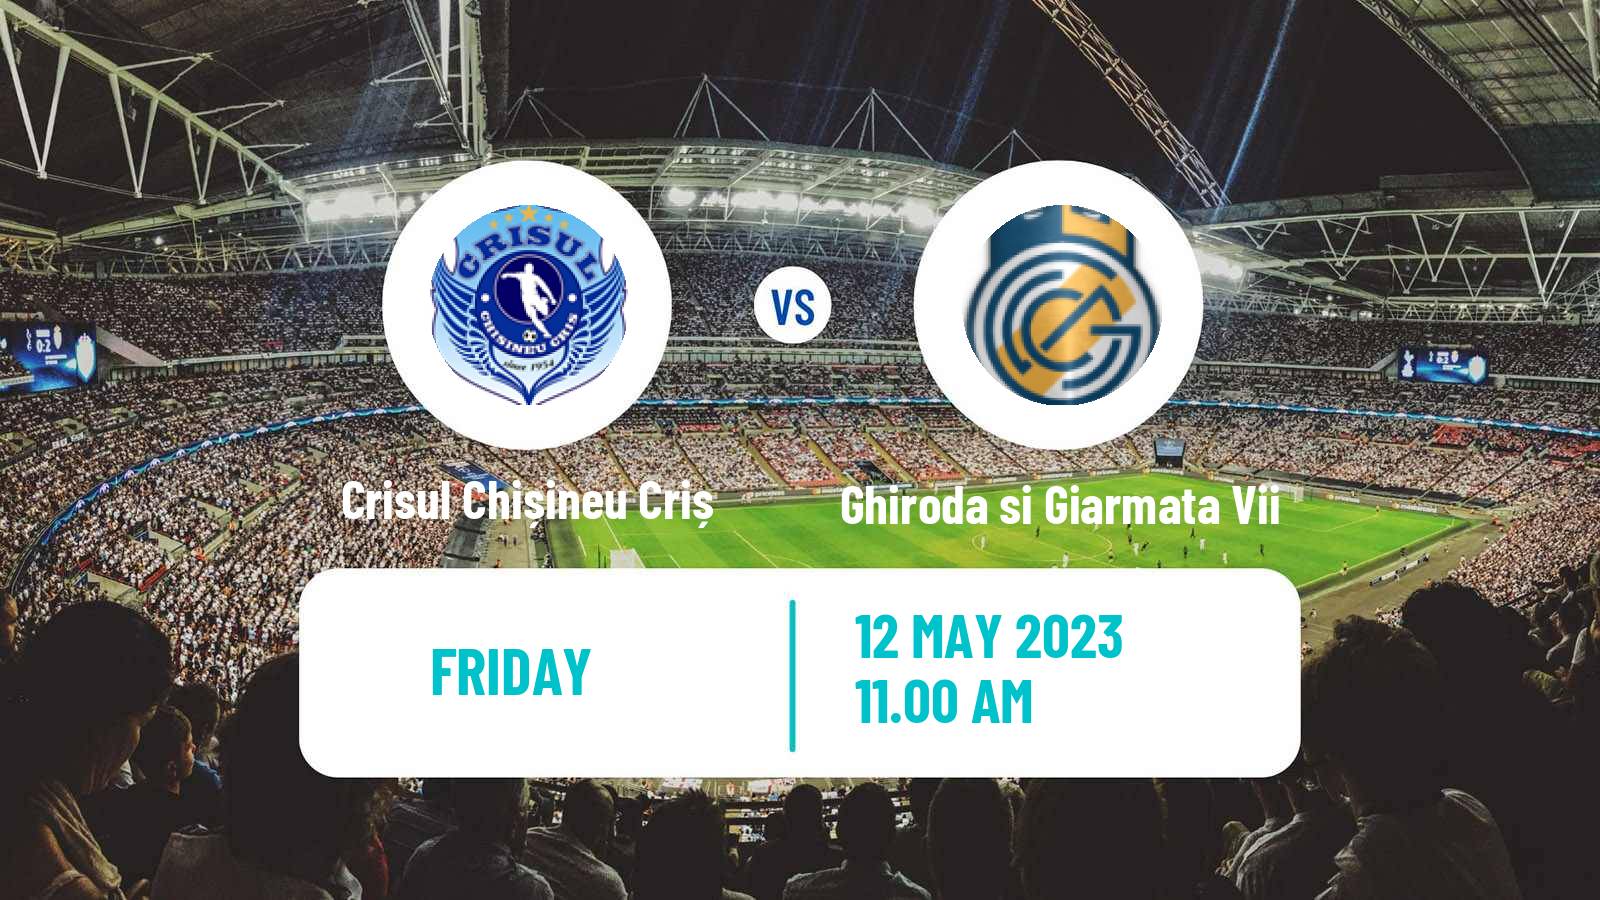 Soccer Romanian Liga 3 - Seria 8 Crisul Chișineu Criș - Ghiroda si Giarmata Vii